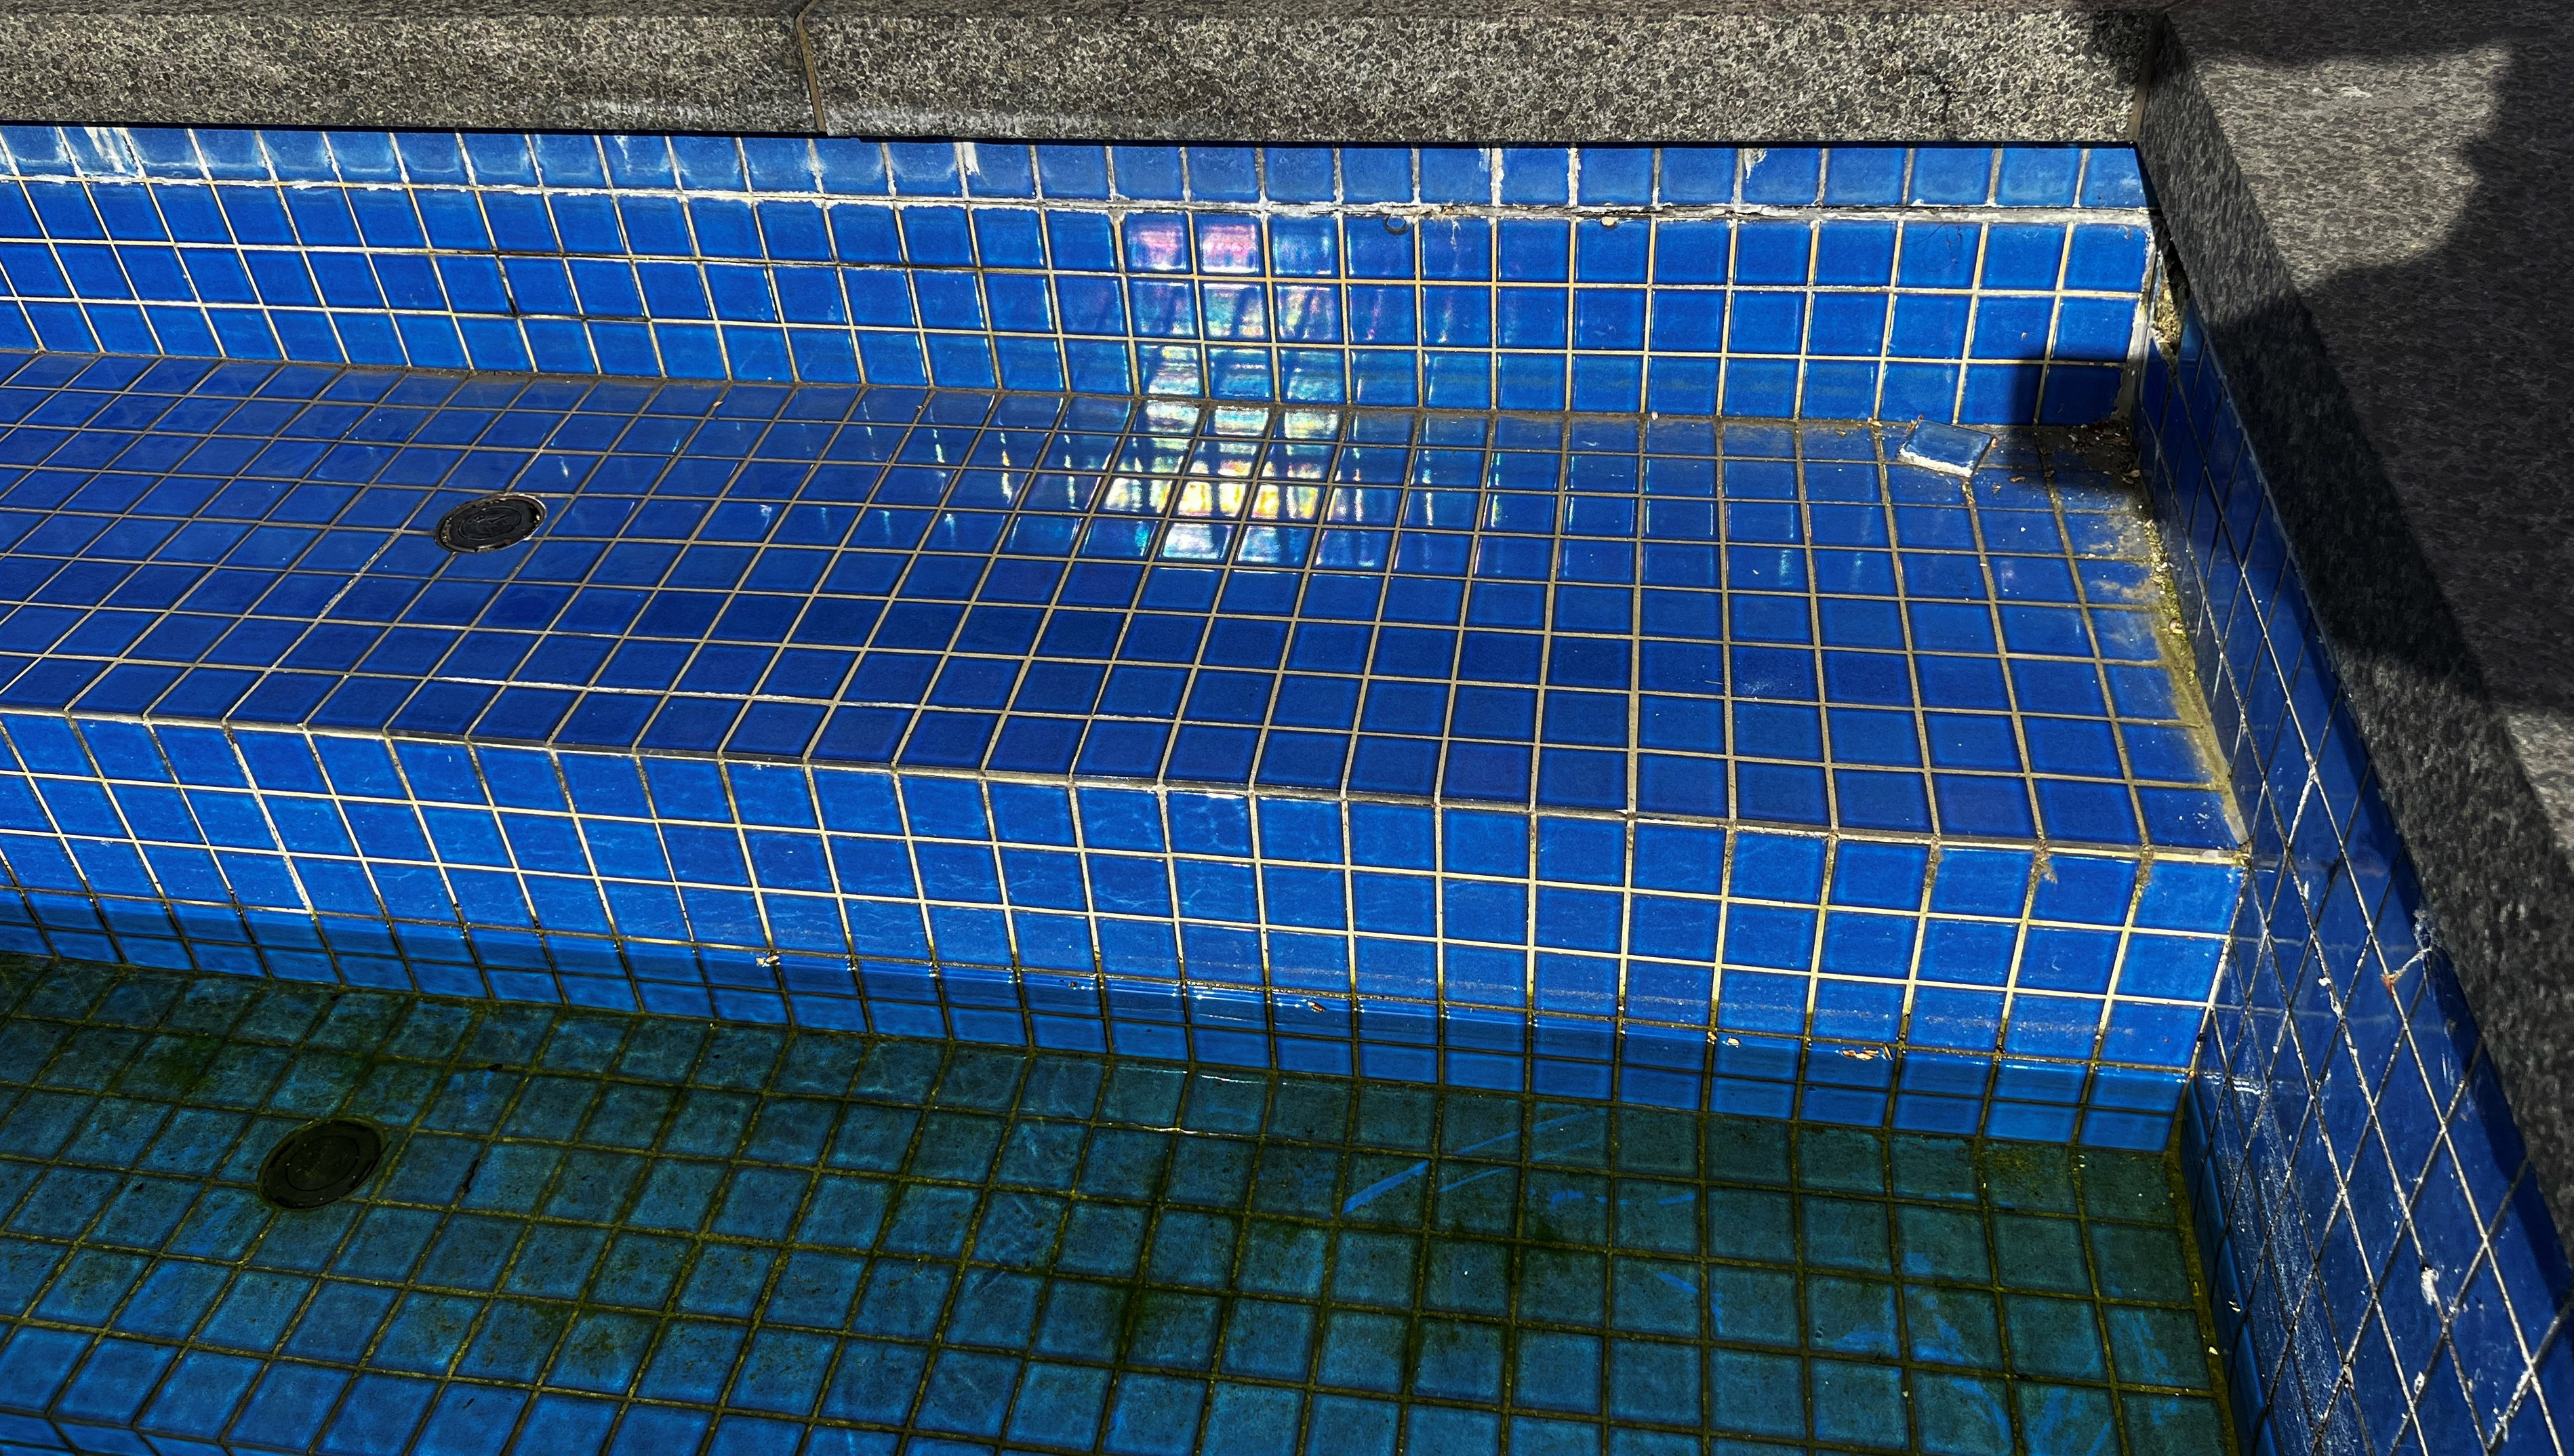 Cracked_tiles_swimming_pool Swimming Pool Shape Change